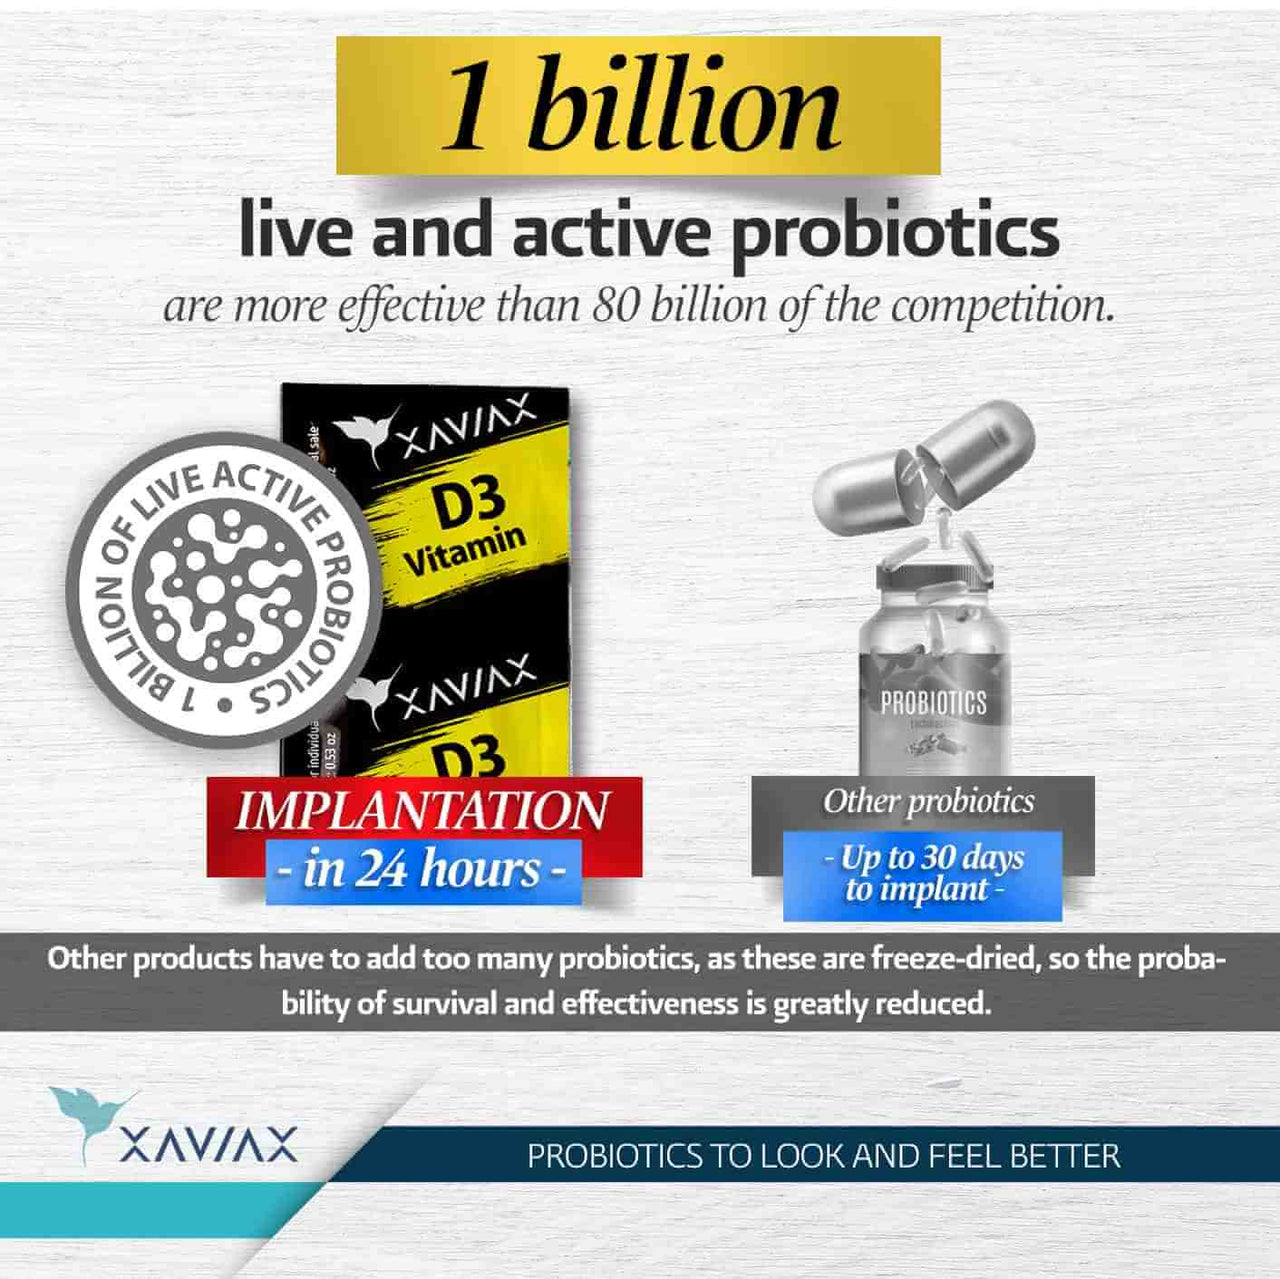 Vitamin has 1 billion live and active probiotics